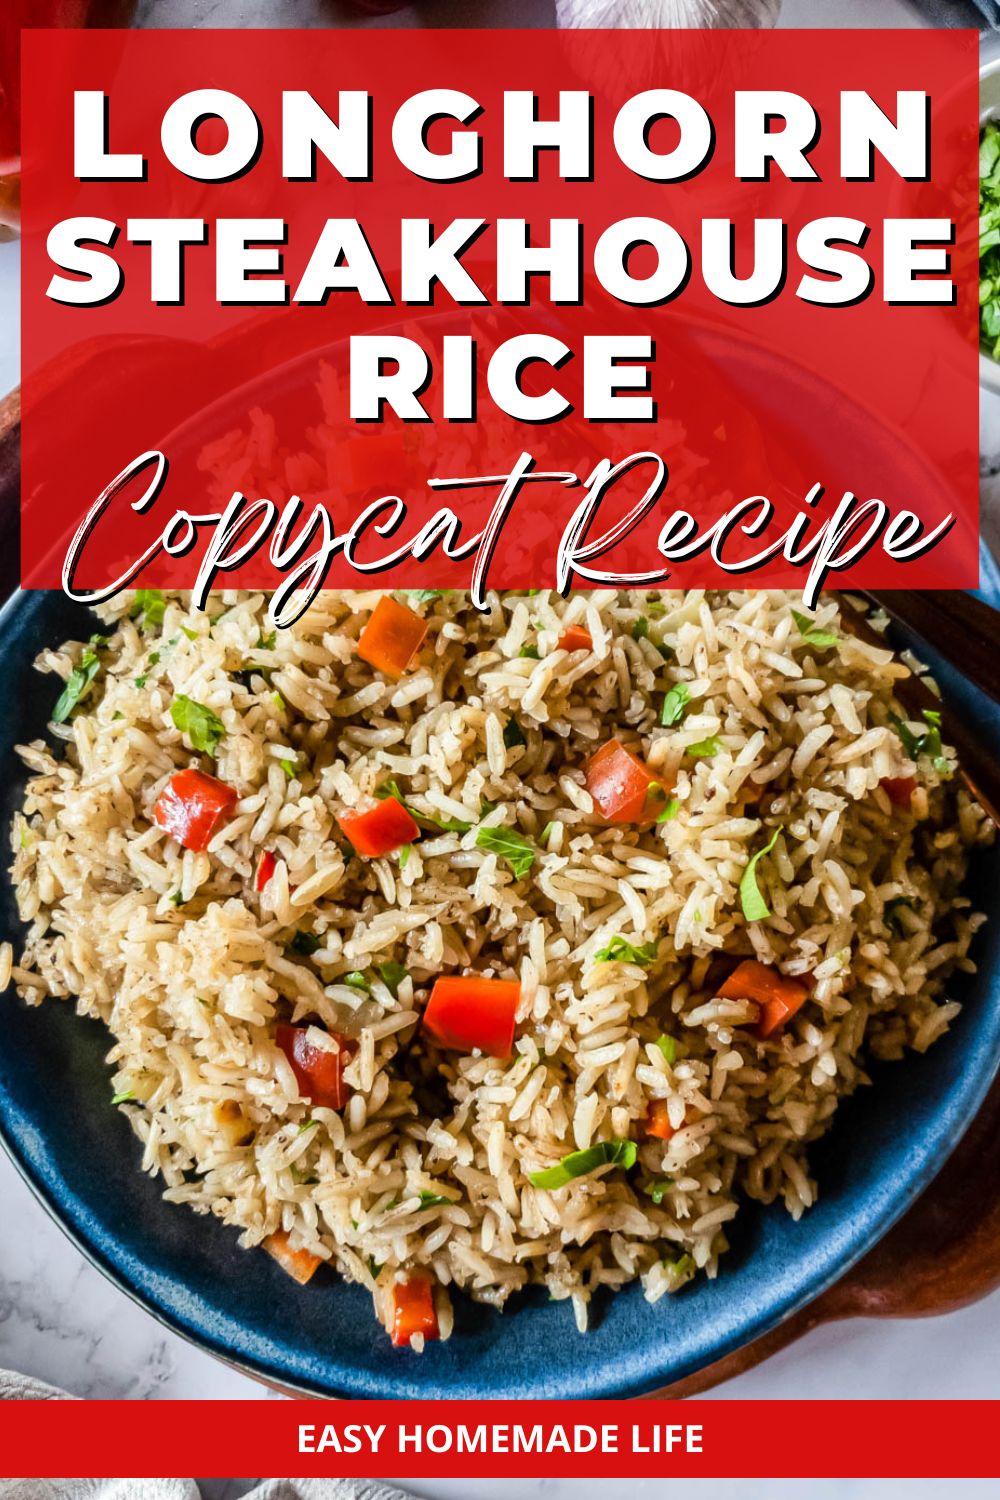 Longhorn Steakhouse Rice Copycat Recipe.